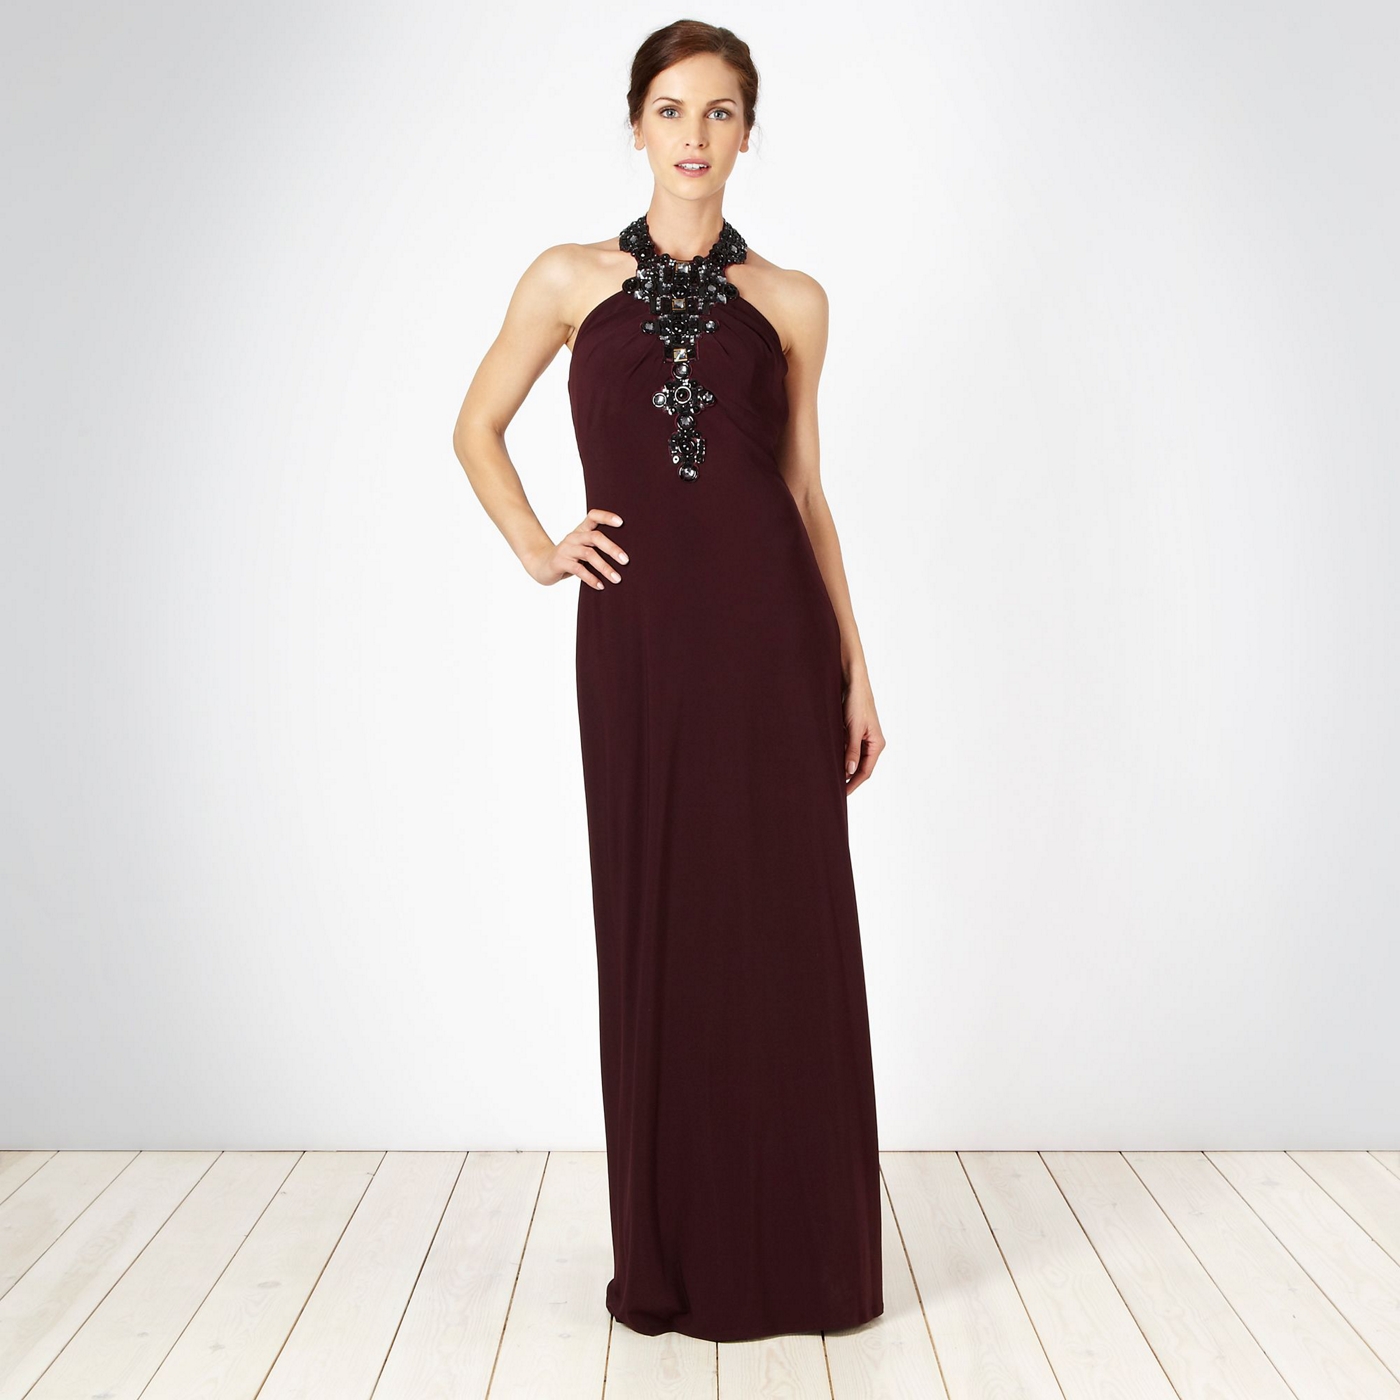 No. 1 Jenny Packham Designer burgundy beaded halter neck maxi dress